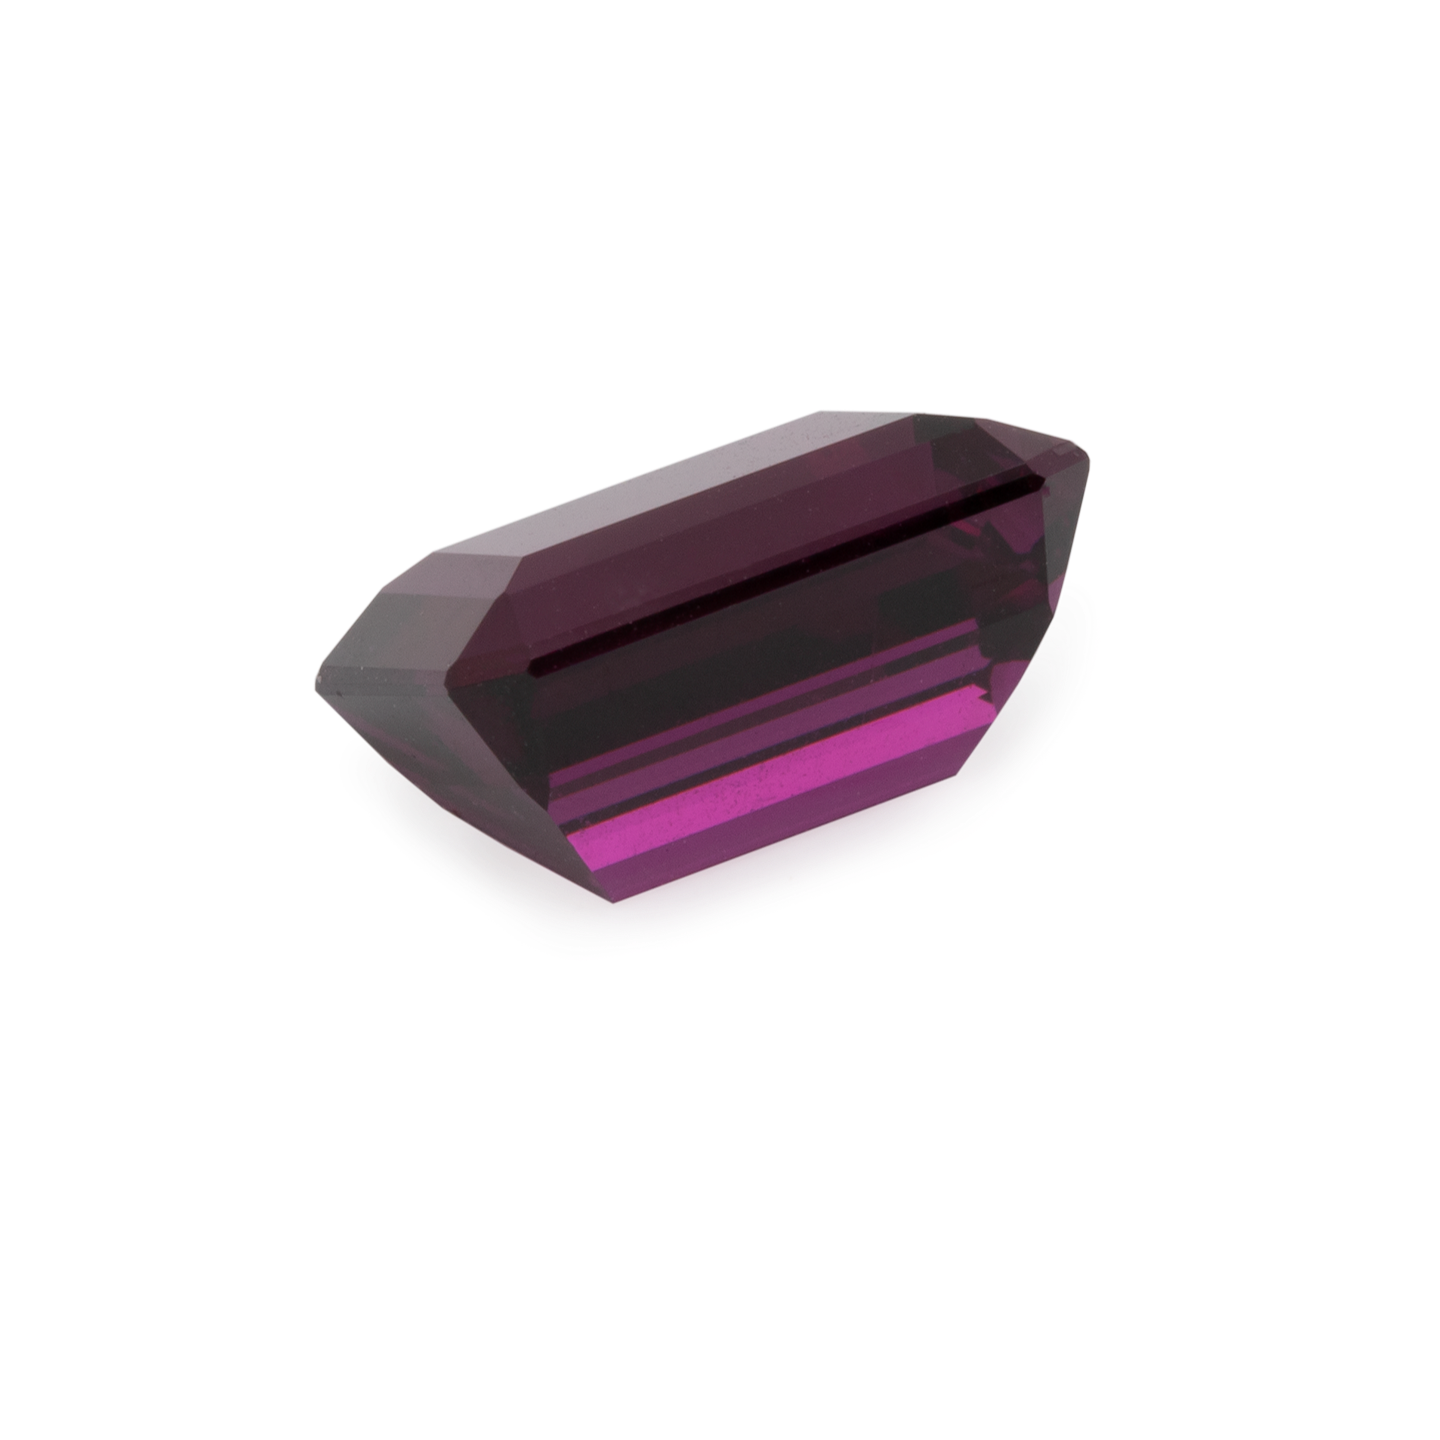 Royal Purple Garnet - lila, achteck, 9,9x7,9 mm, 4,37 cts, Nr. RP56001